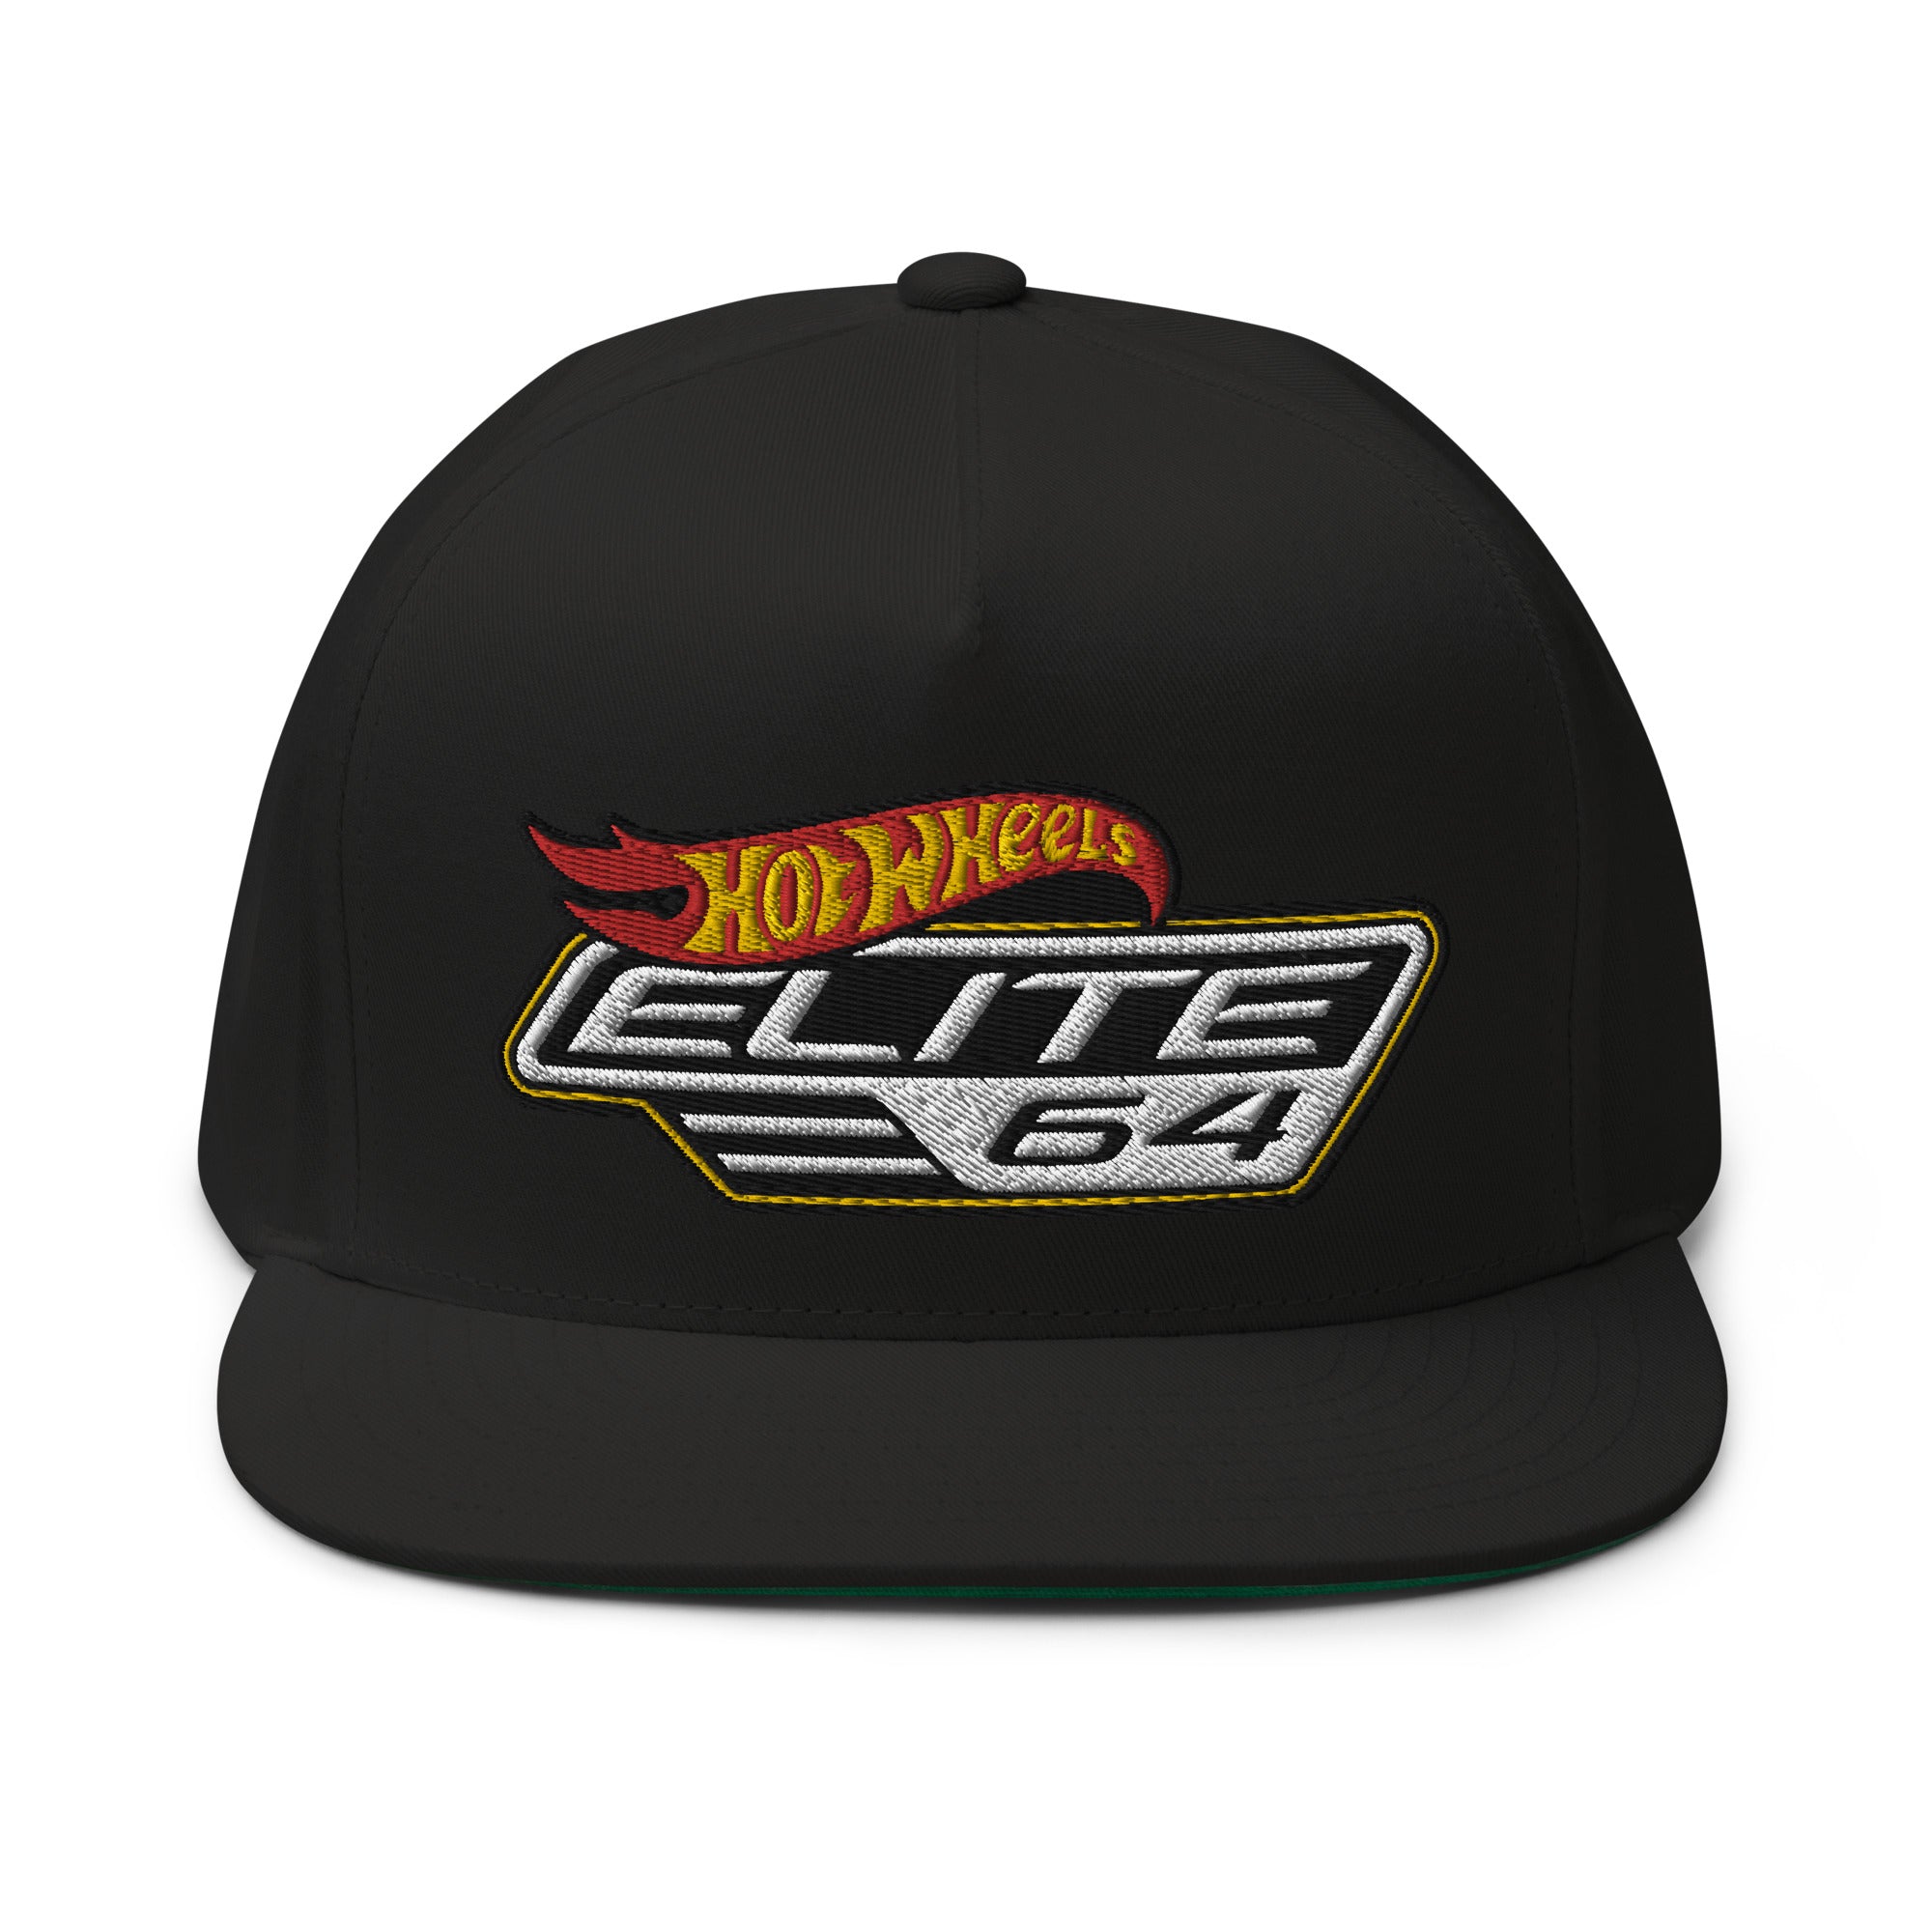 Hot Wheels Elite 64 Snapback Hat